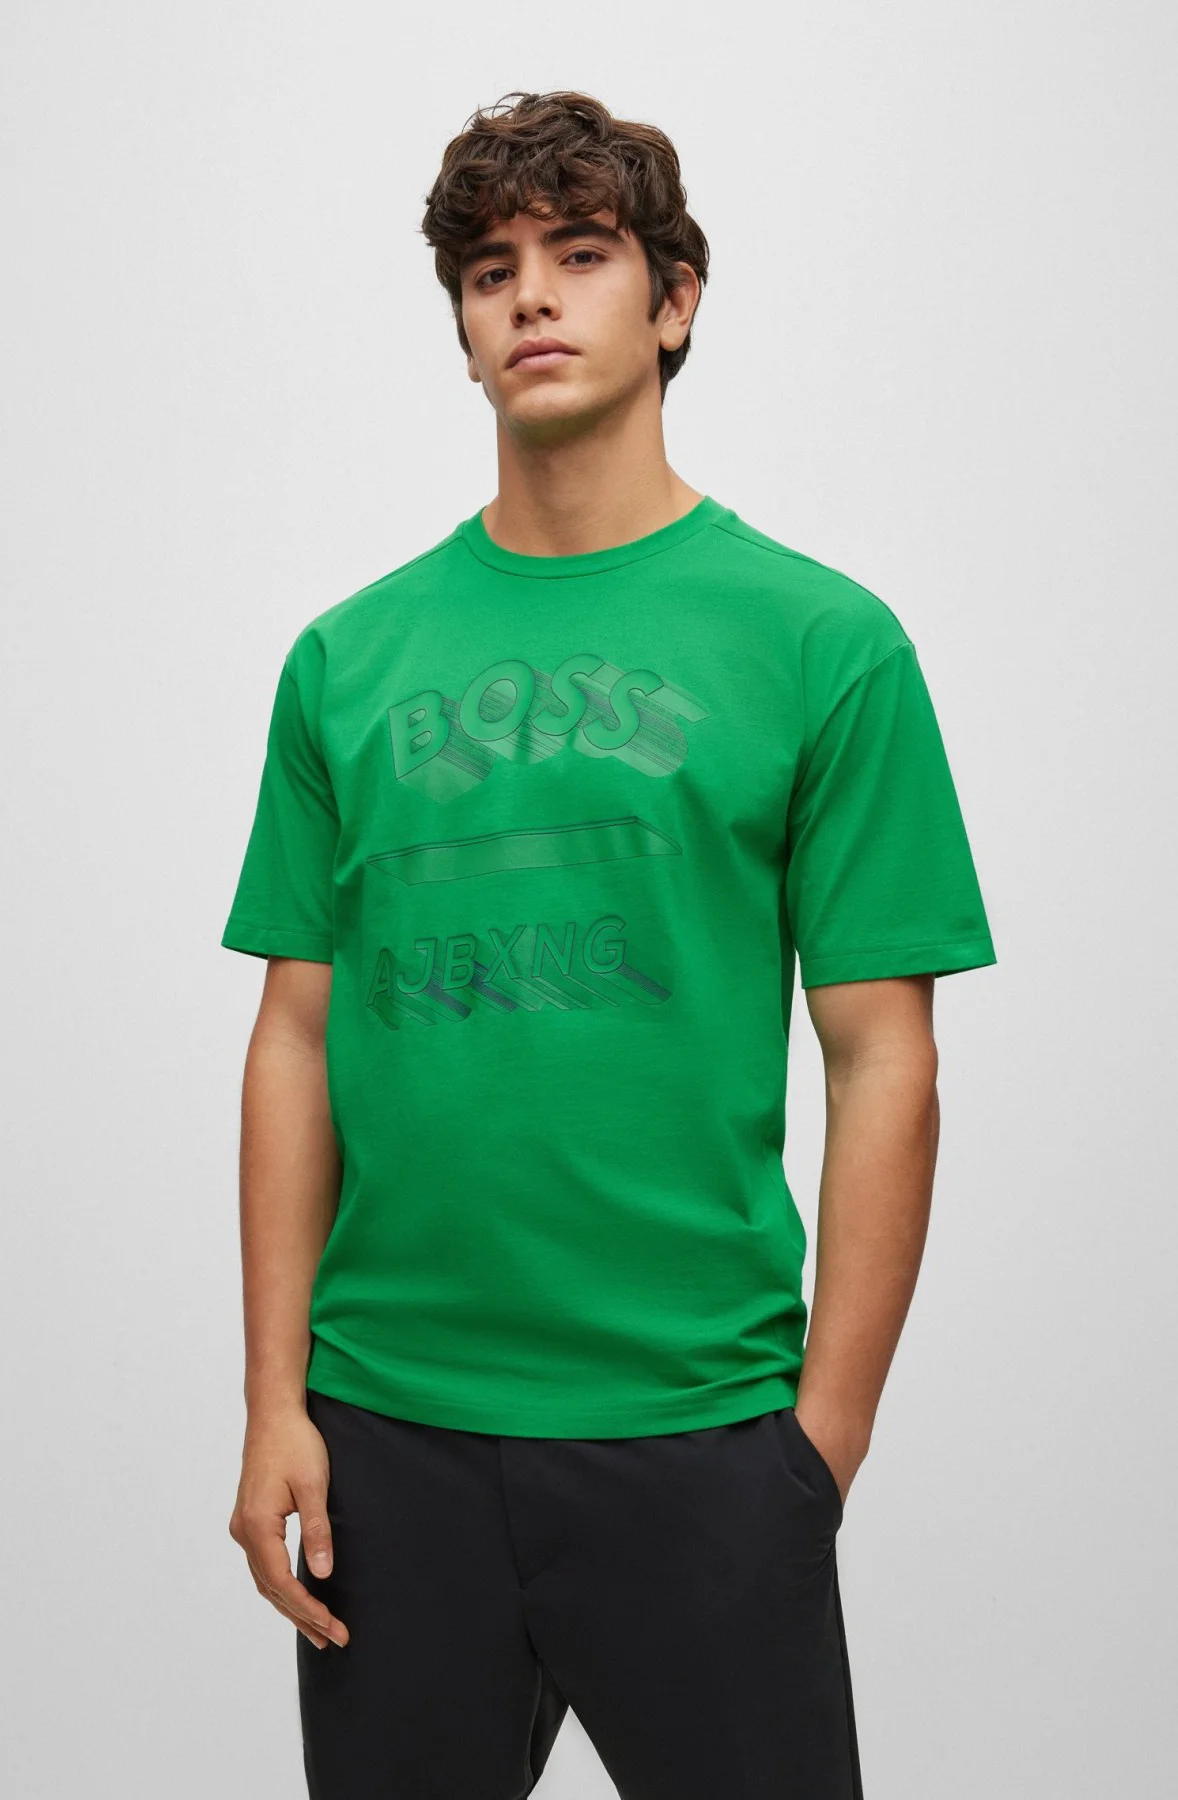 зелёная мужская модная футболка Босс